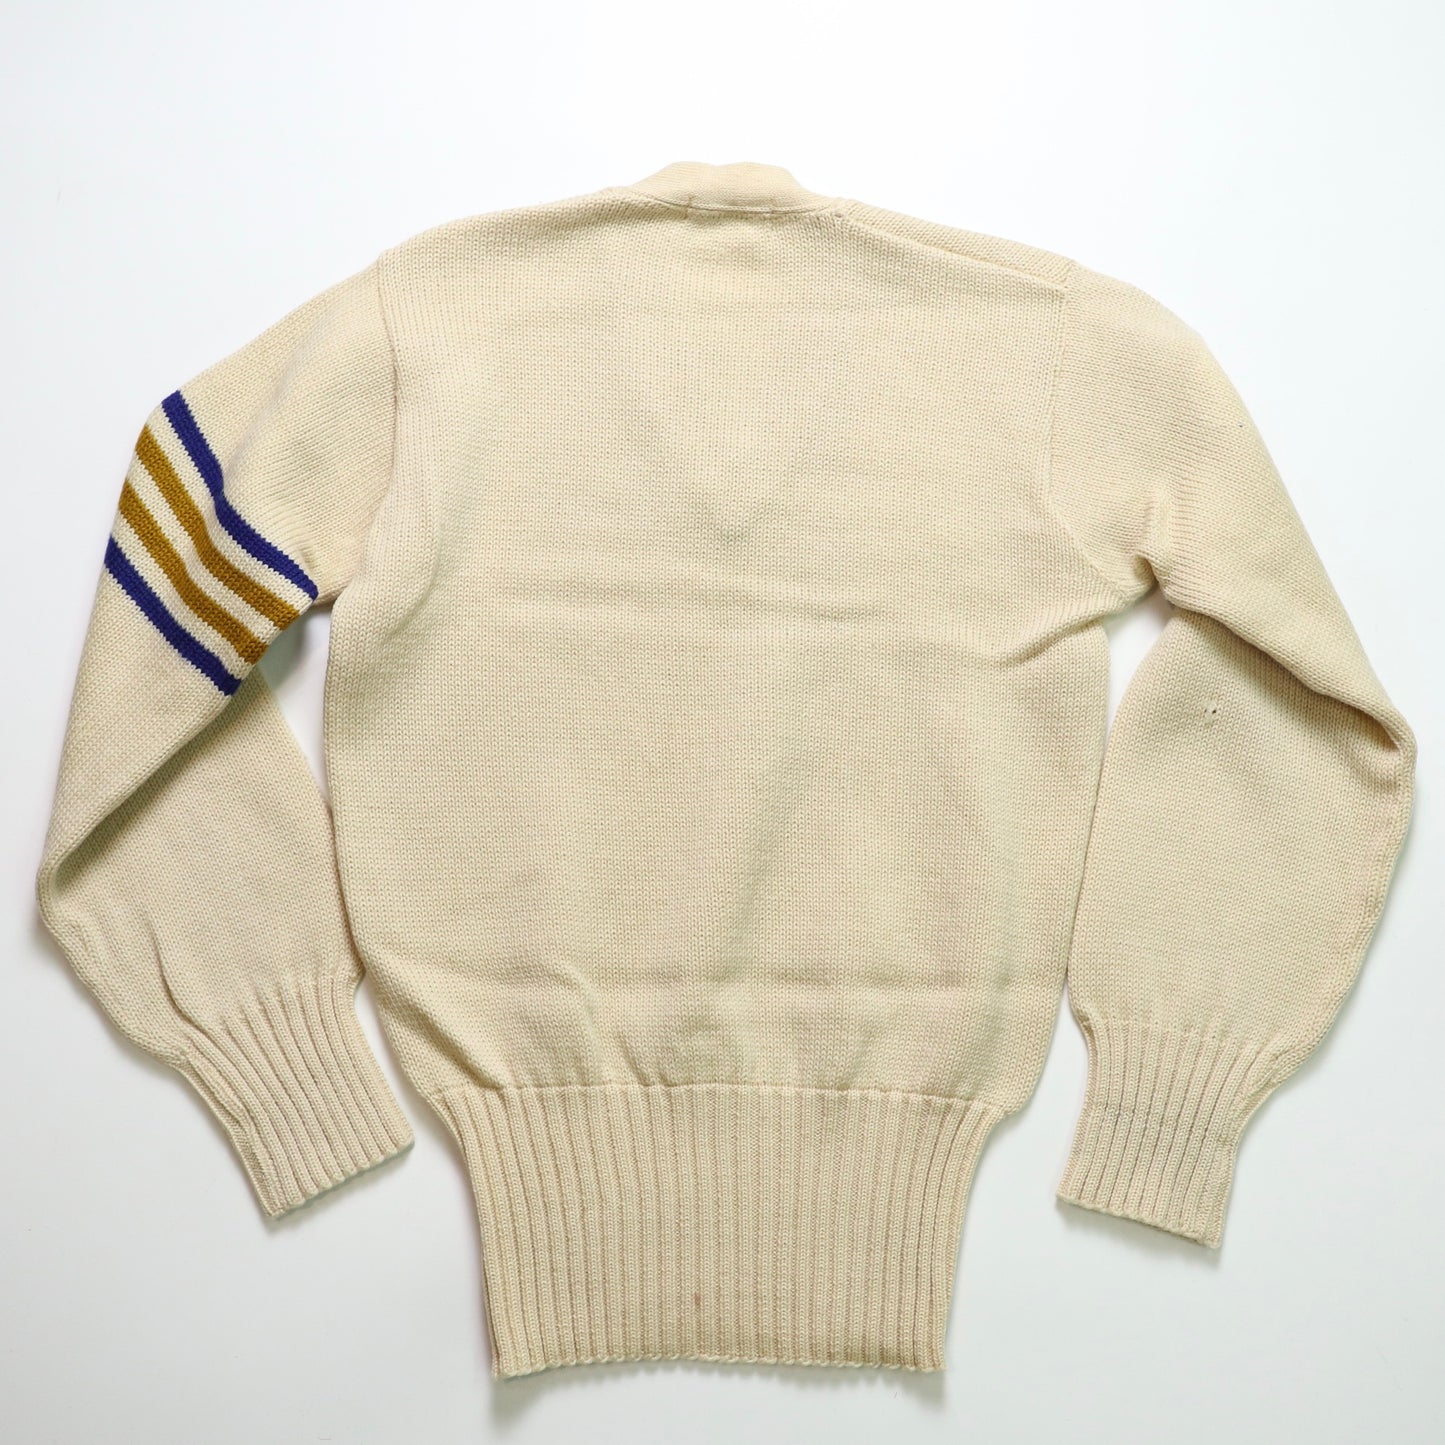 70's Letterman Sweater アメリカンキャンパスセーター